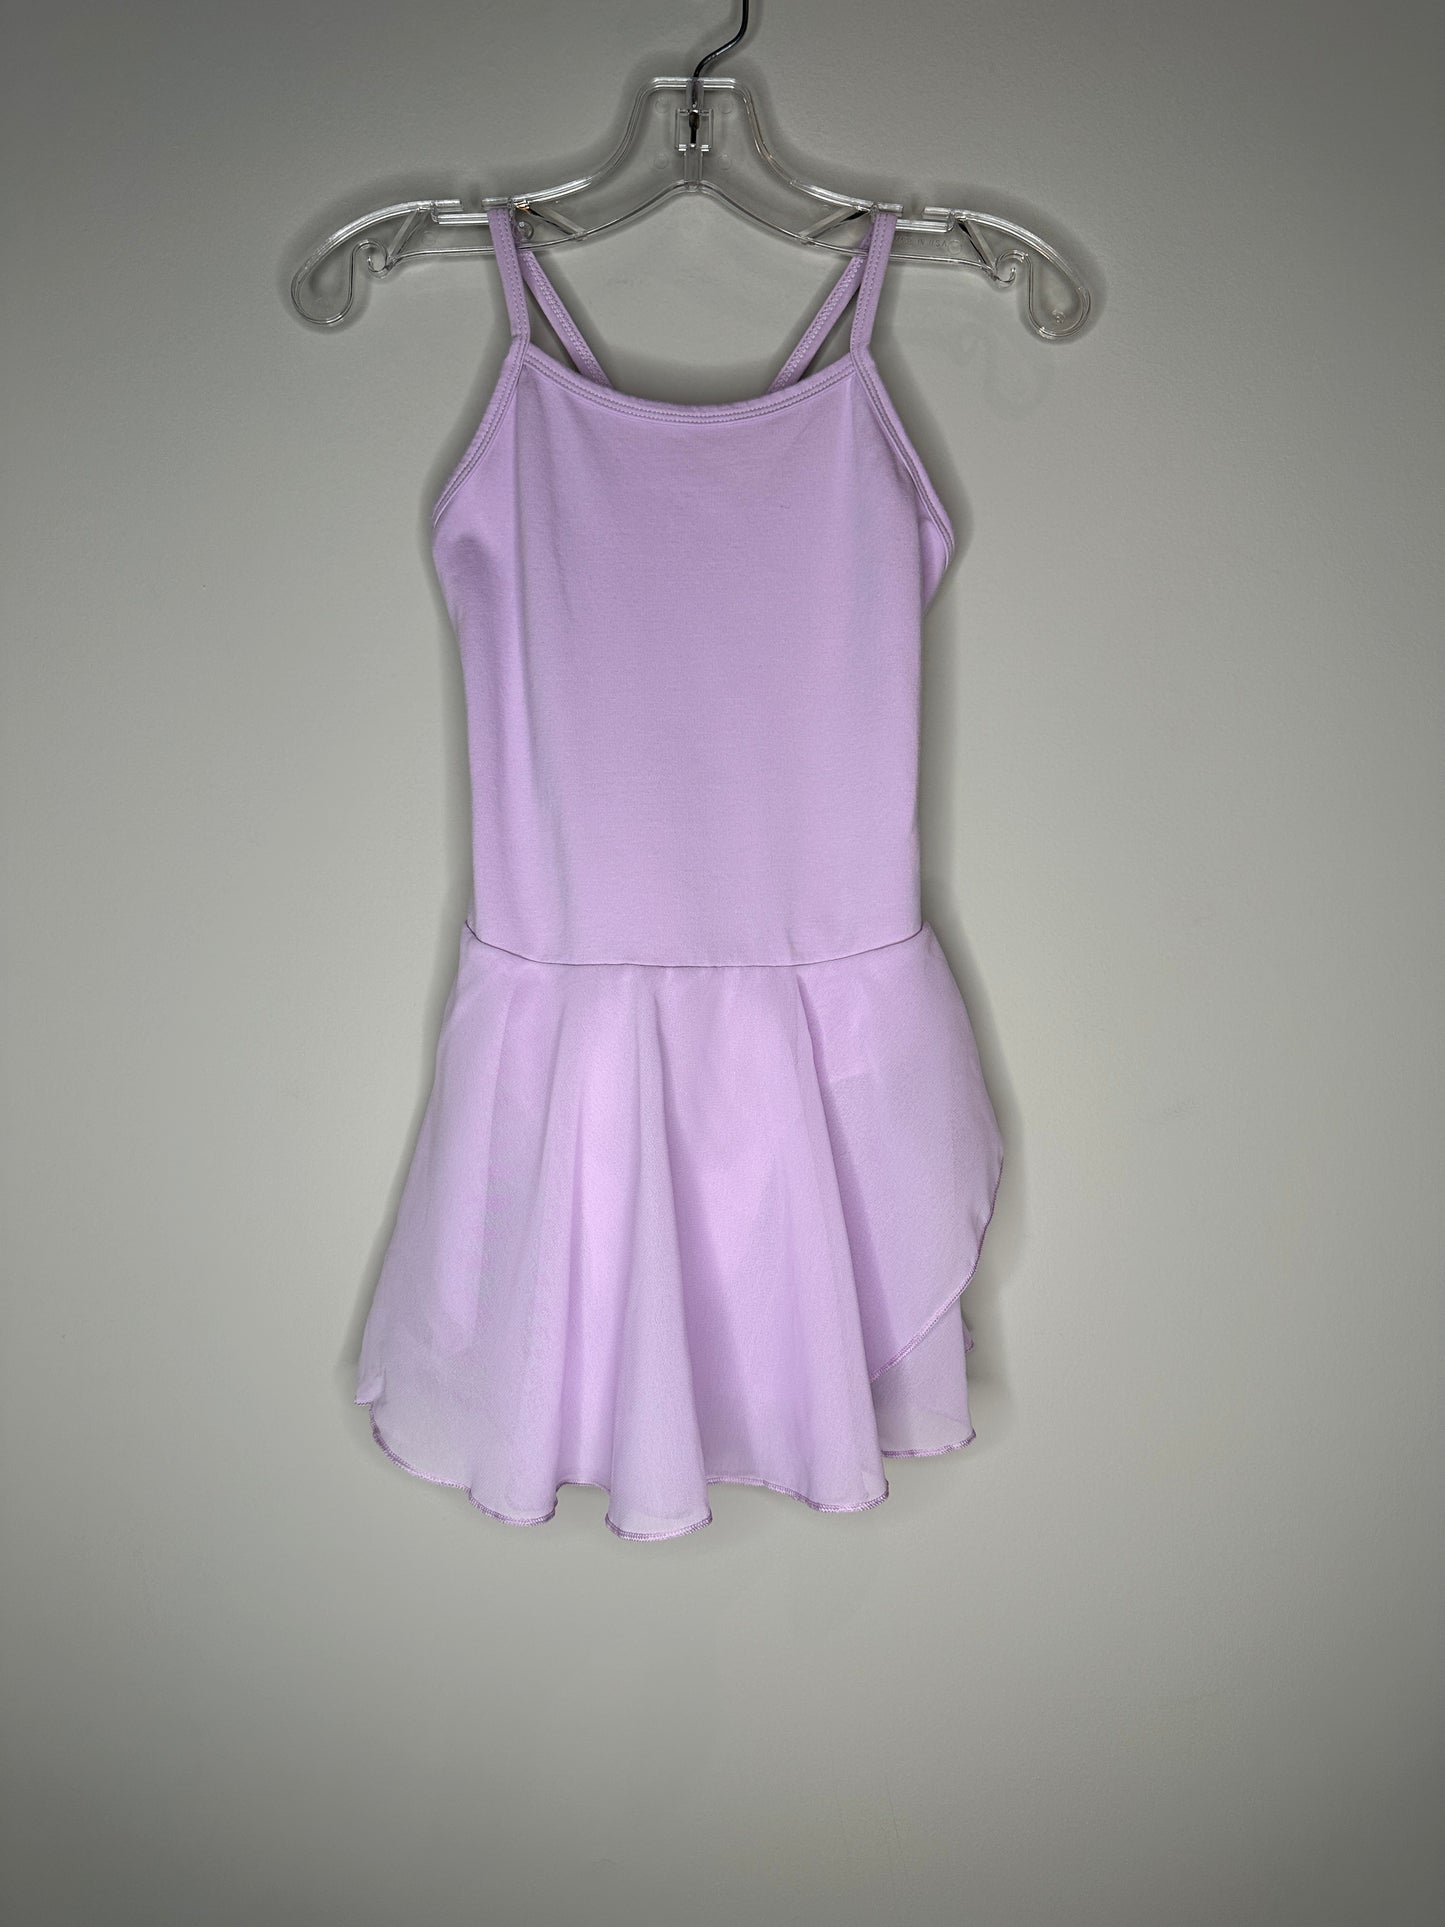 Girls' Size M Lavender Pull-On Tutu Ballet Leotard Dance Dress Dance Costume